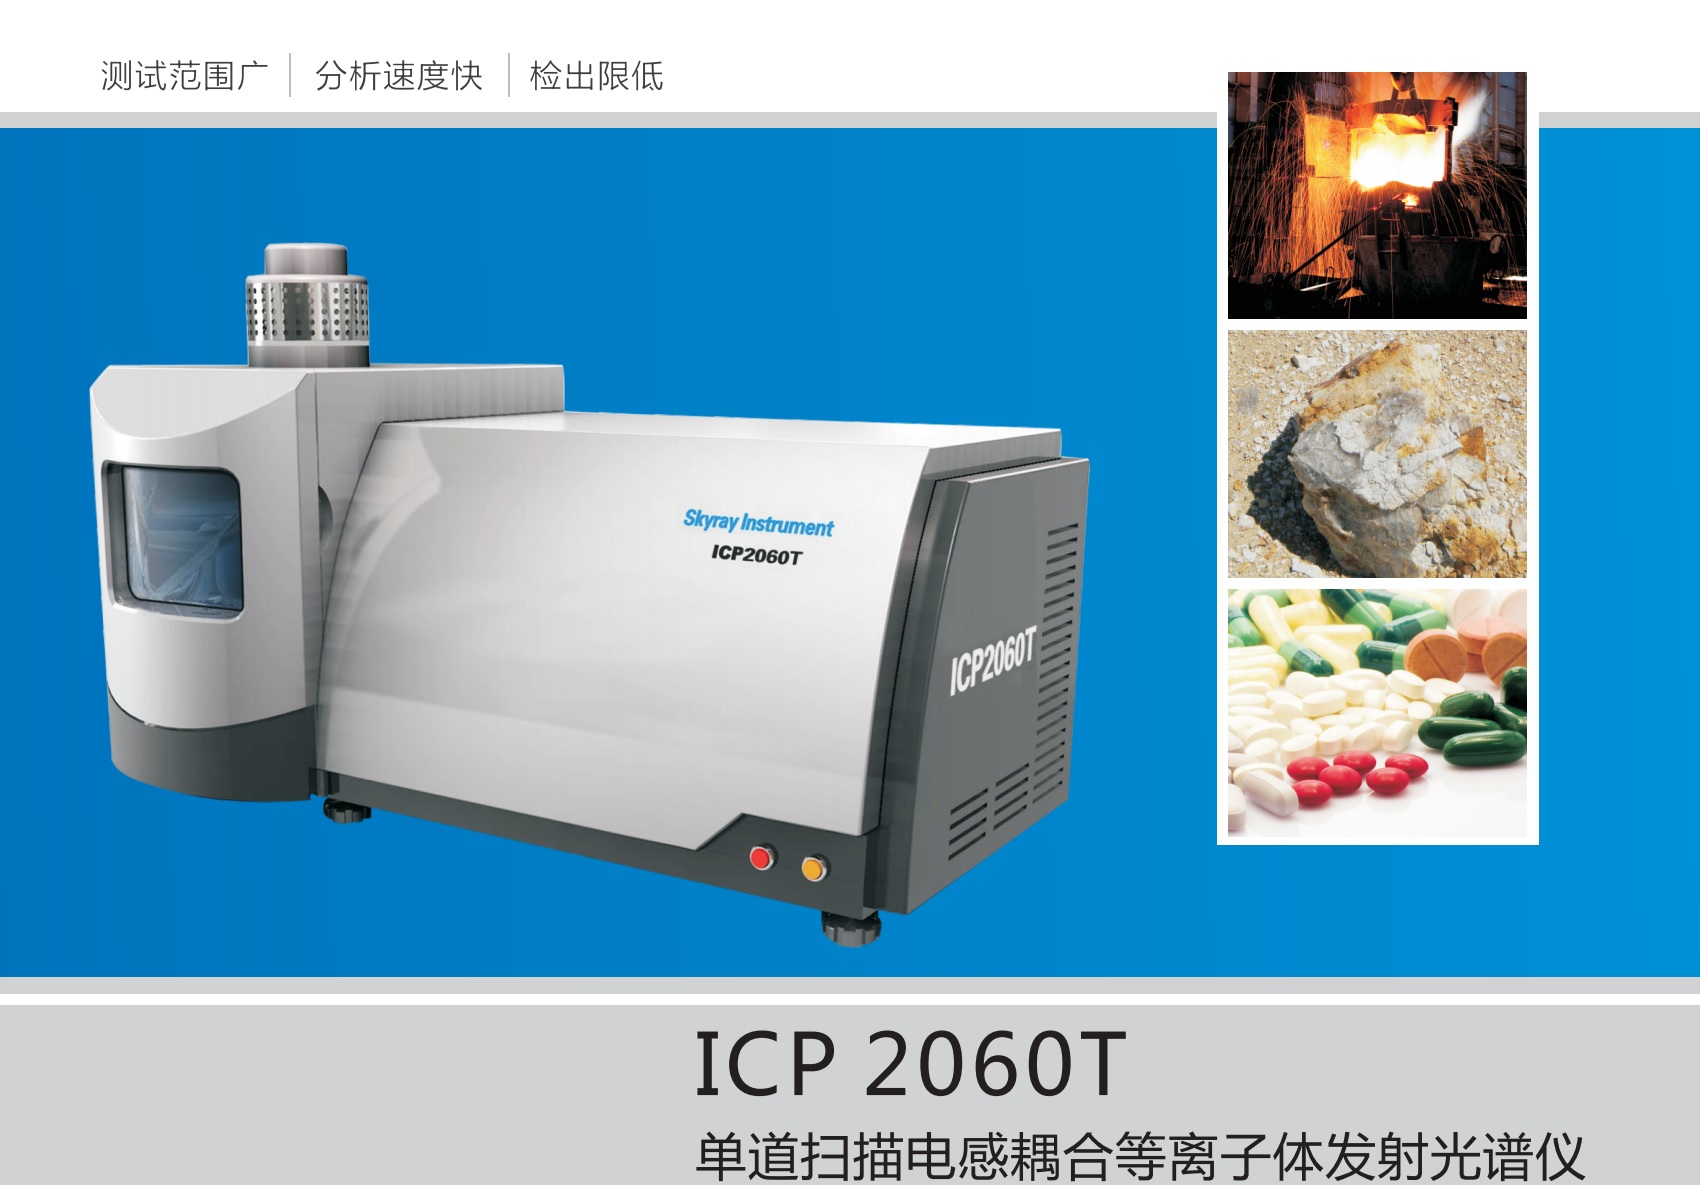 Jiangsu Skyray Instrument Co., Ltd.-ICP 2060T